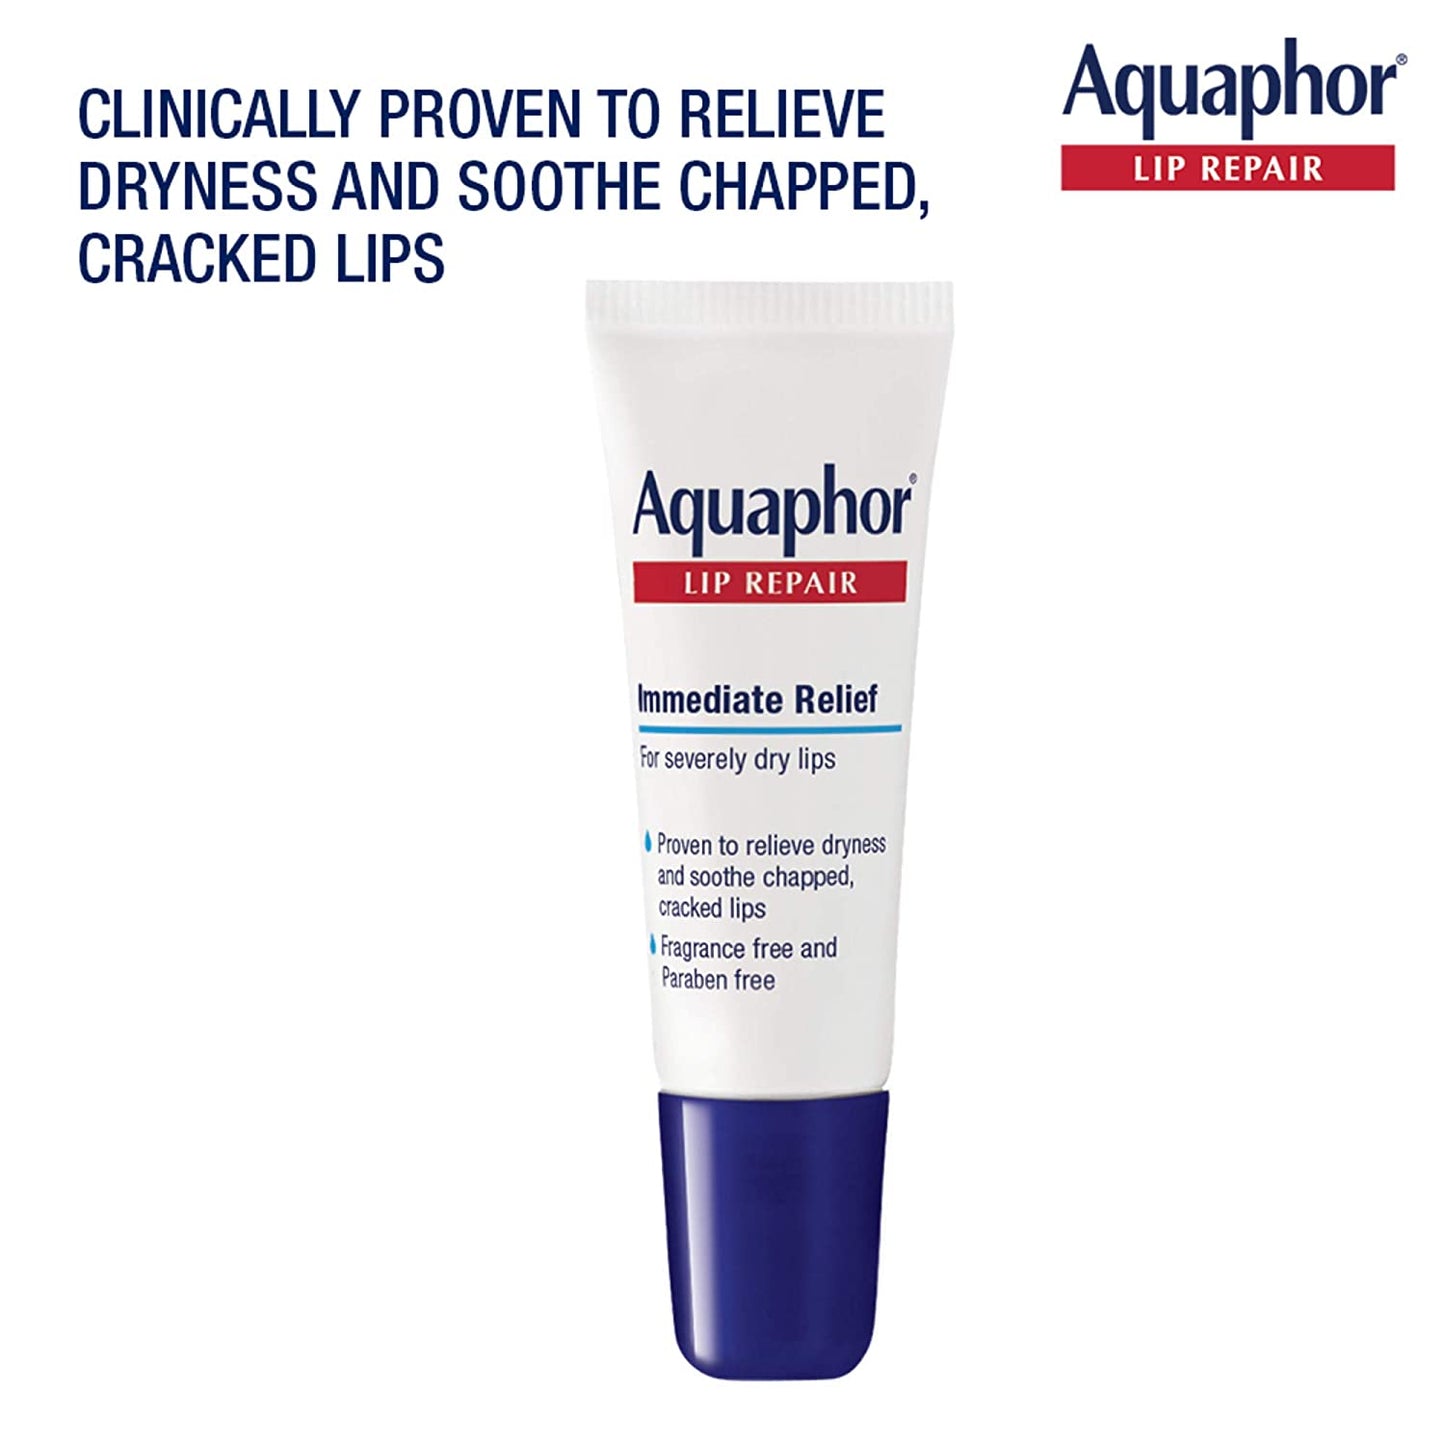 Aquaphor Lip Repair Ointment 10ml